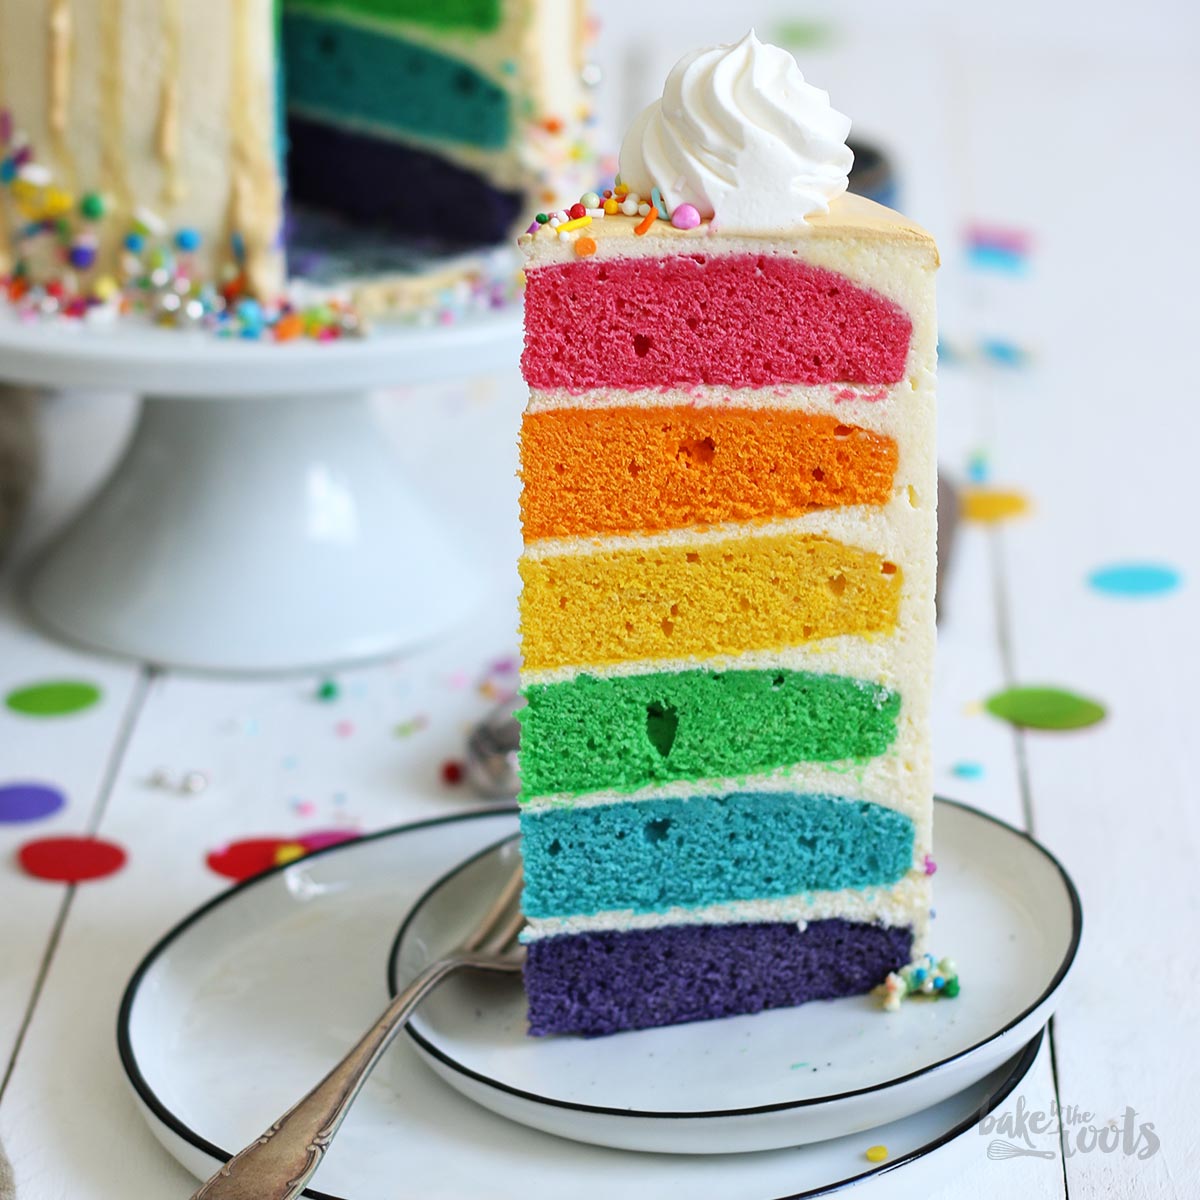 Rainbowr cake recipe  BBC Good Food